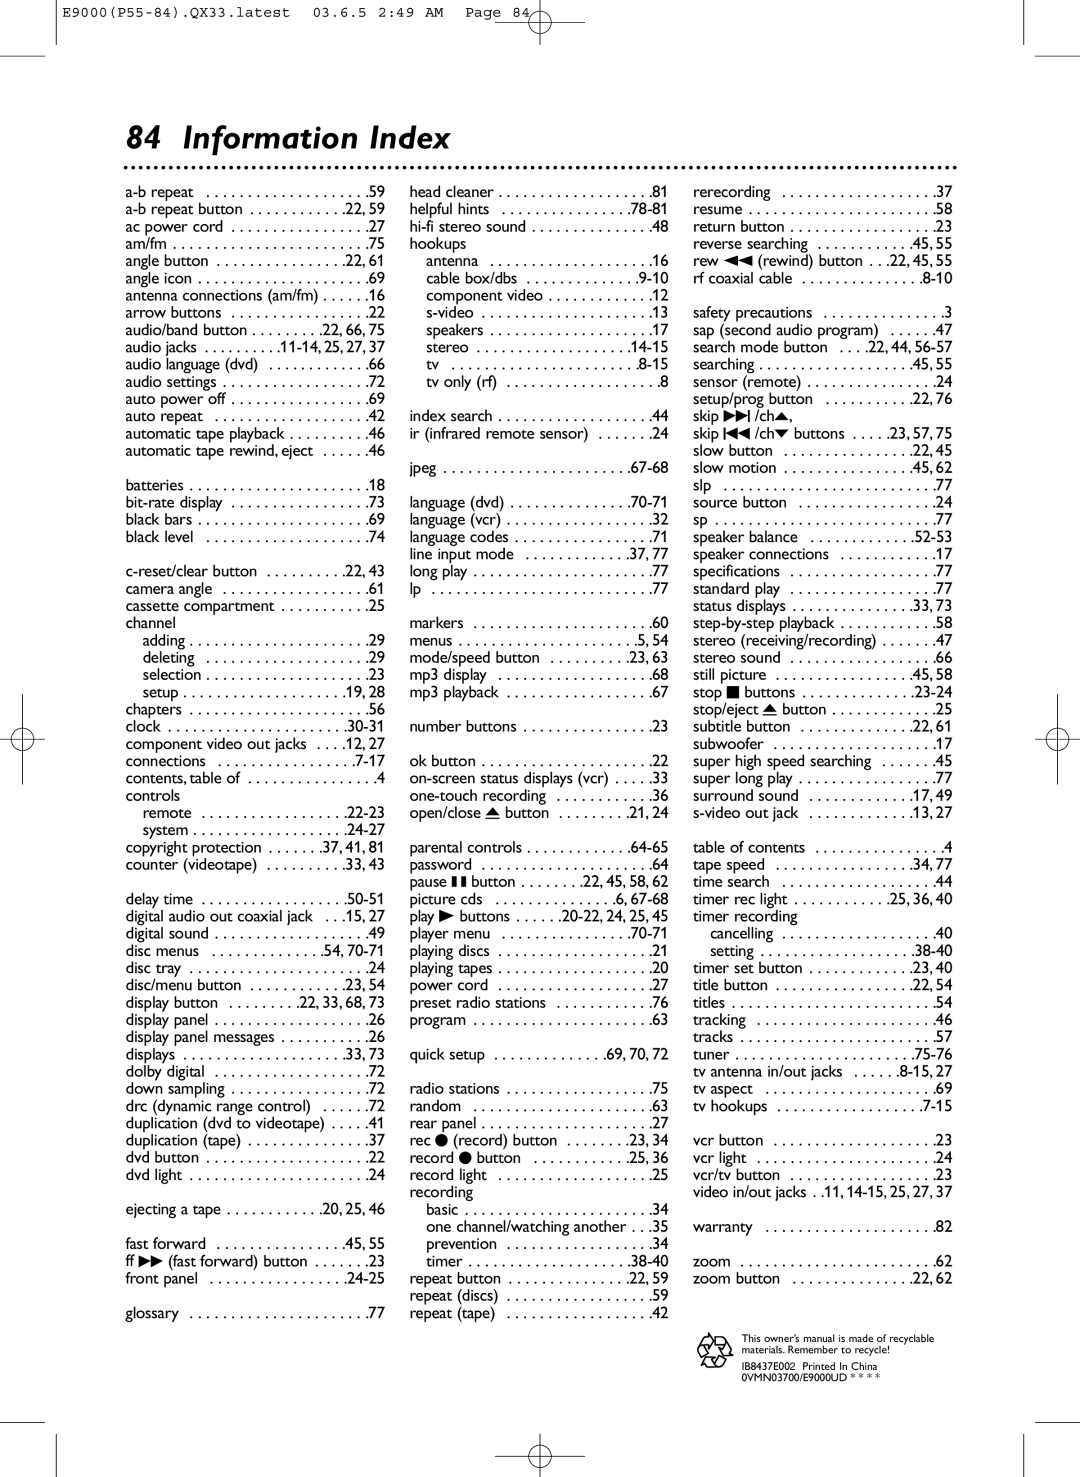 Magnavox MRD500VR owner manual Information Index 